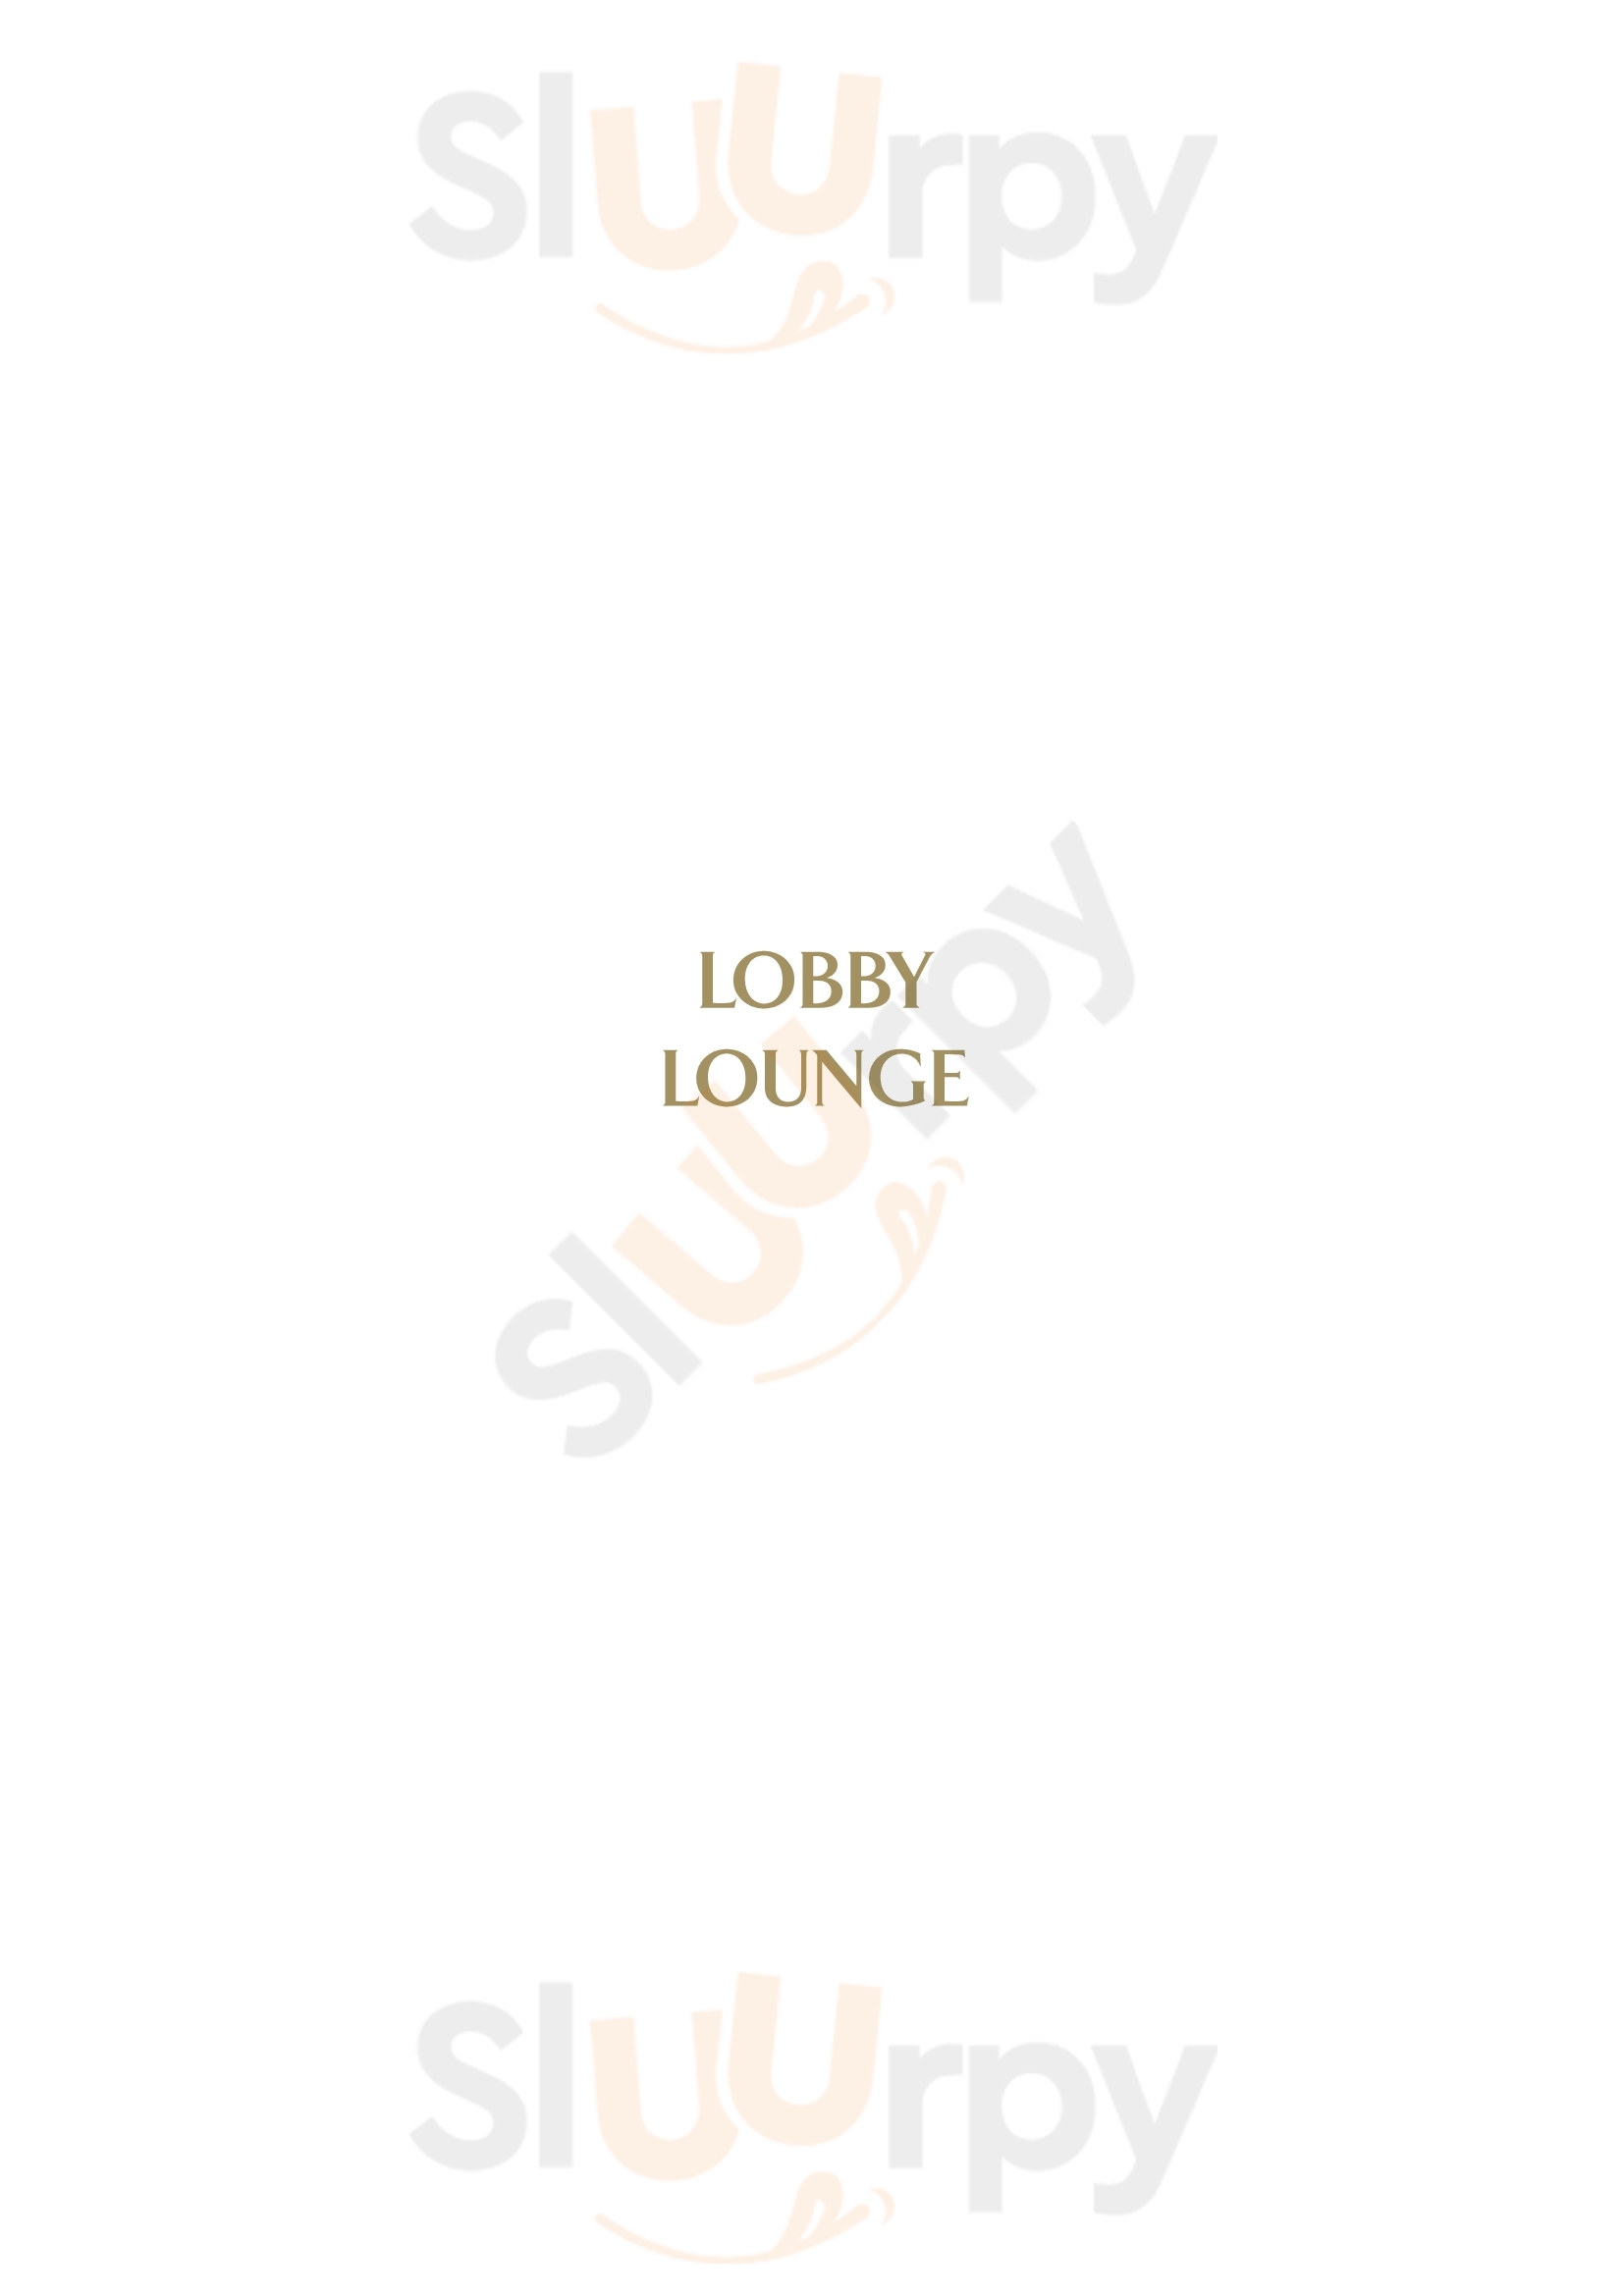 ‪lobby Lounge‬ أبو ظبي Menu - 1